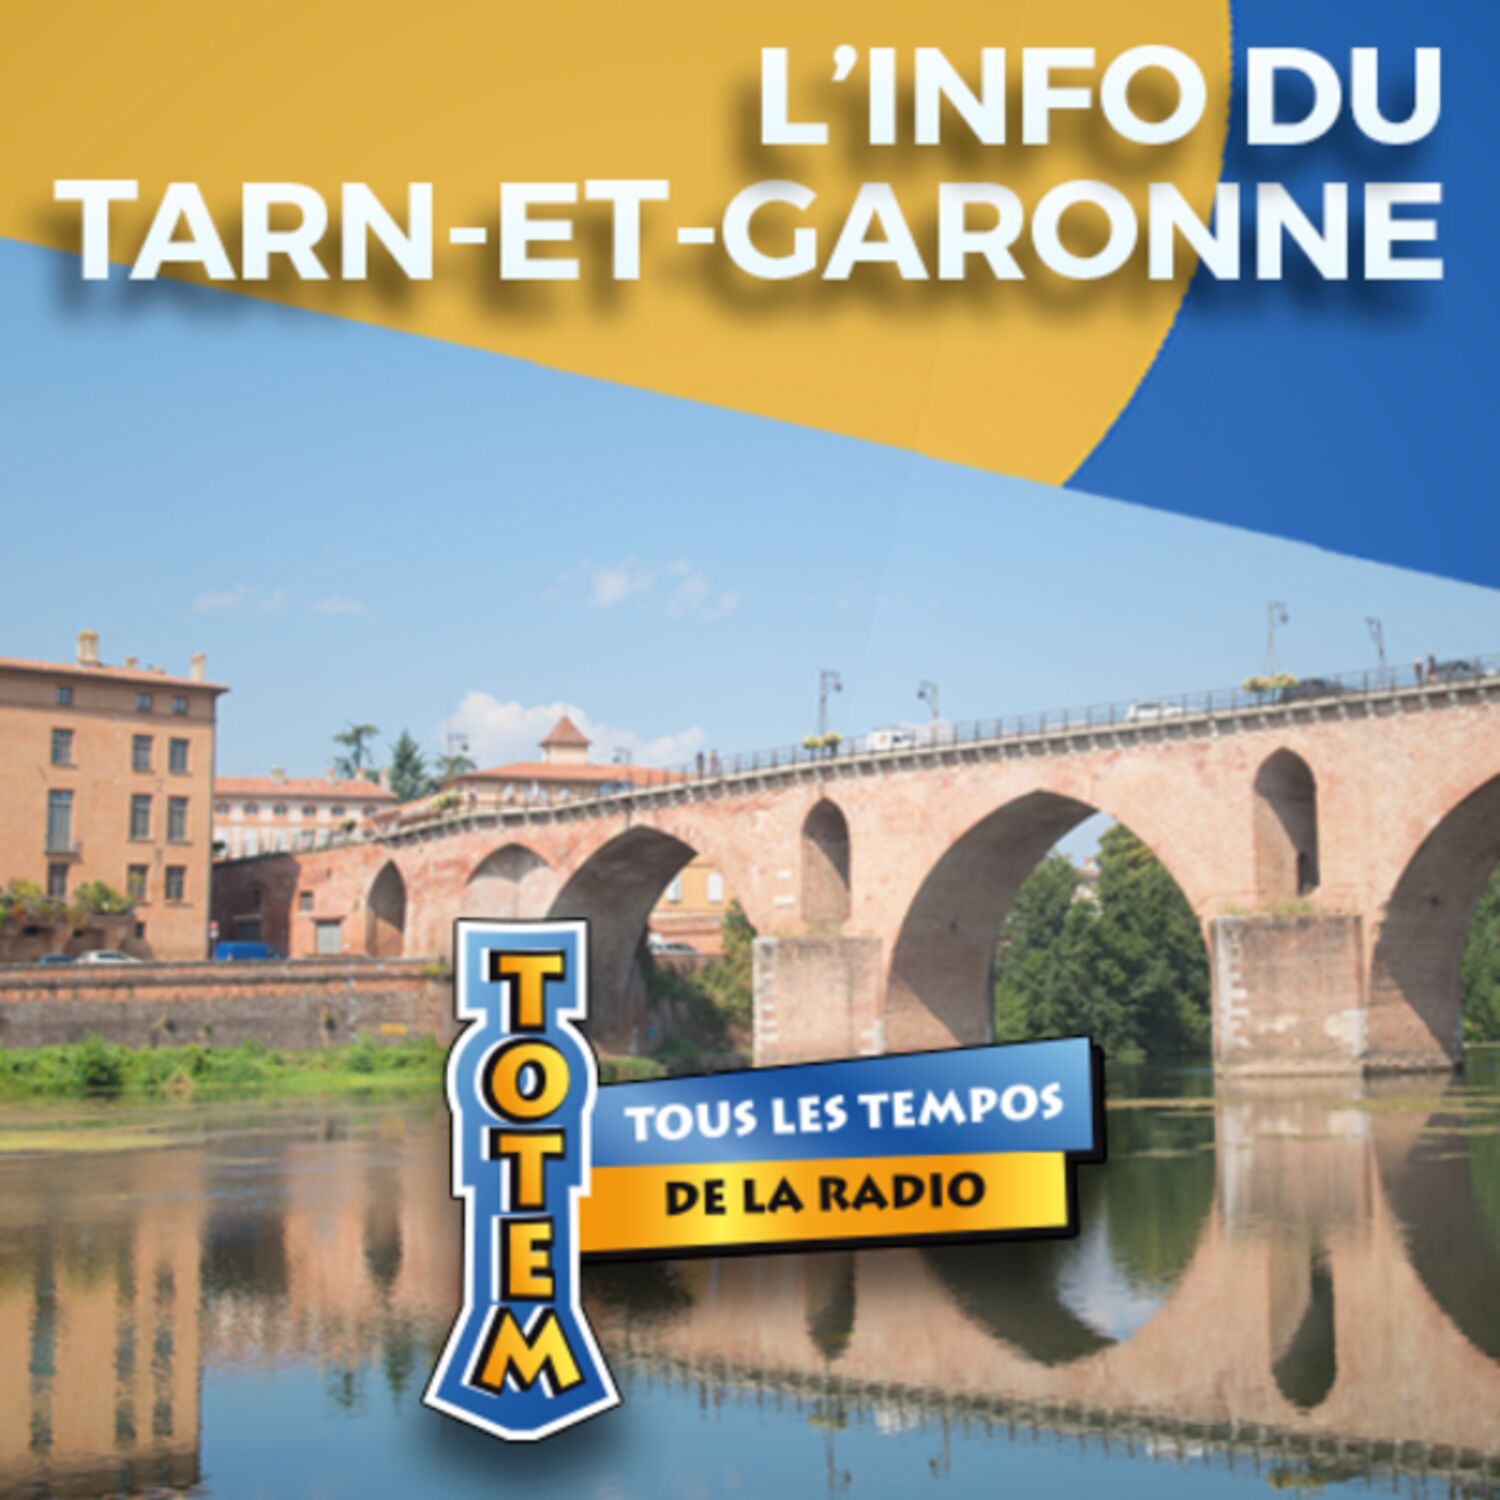 L'info du Tarn-et-Garonne du 12/04/23 à 12h28